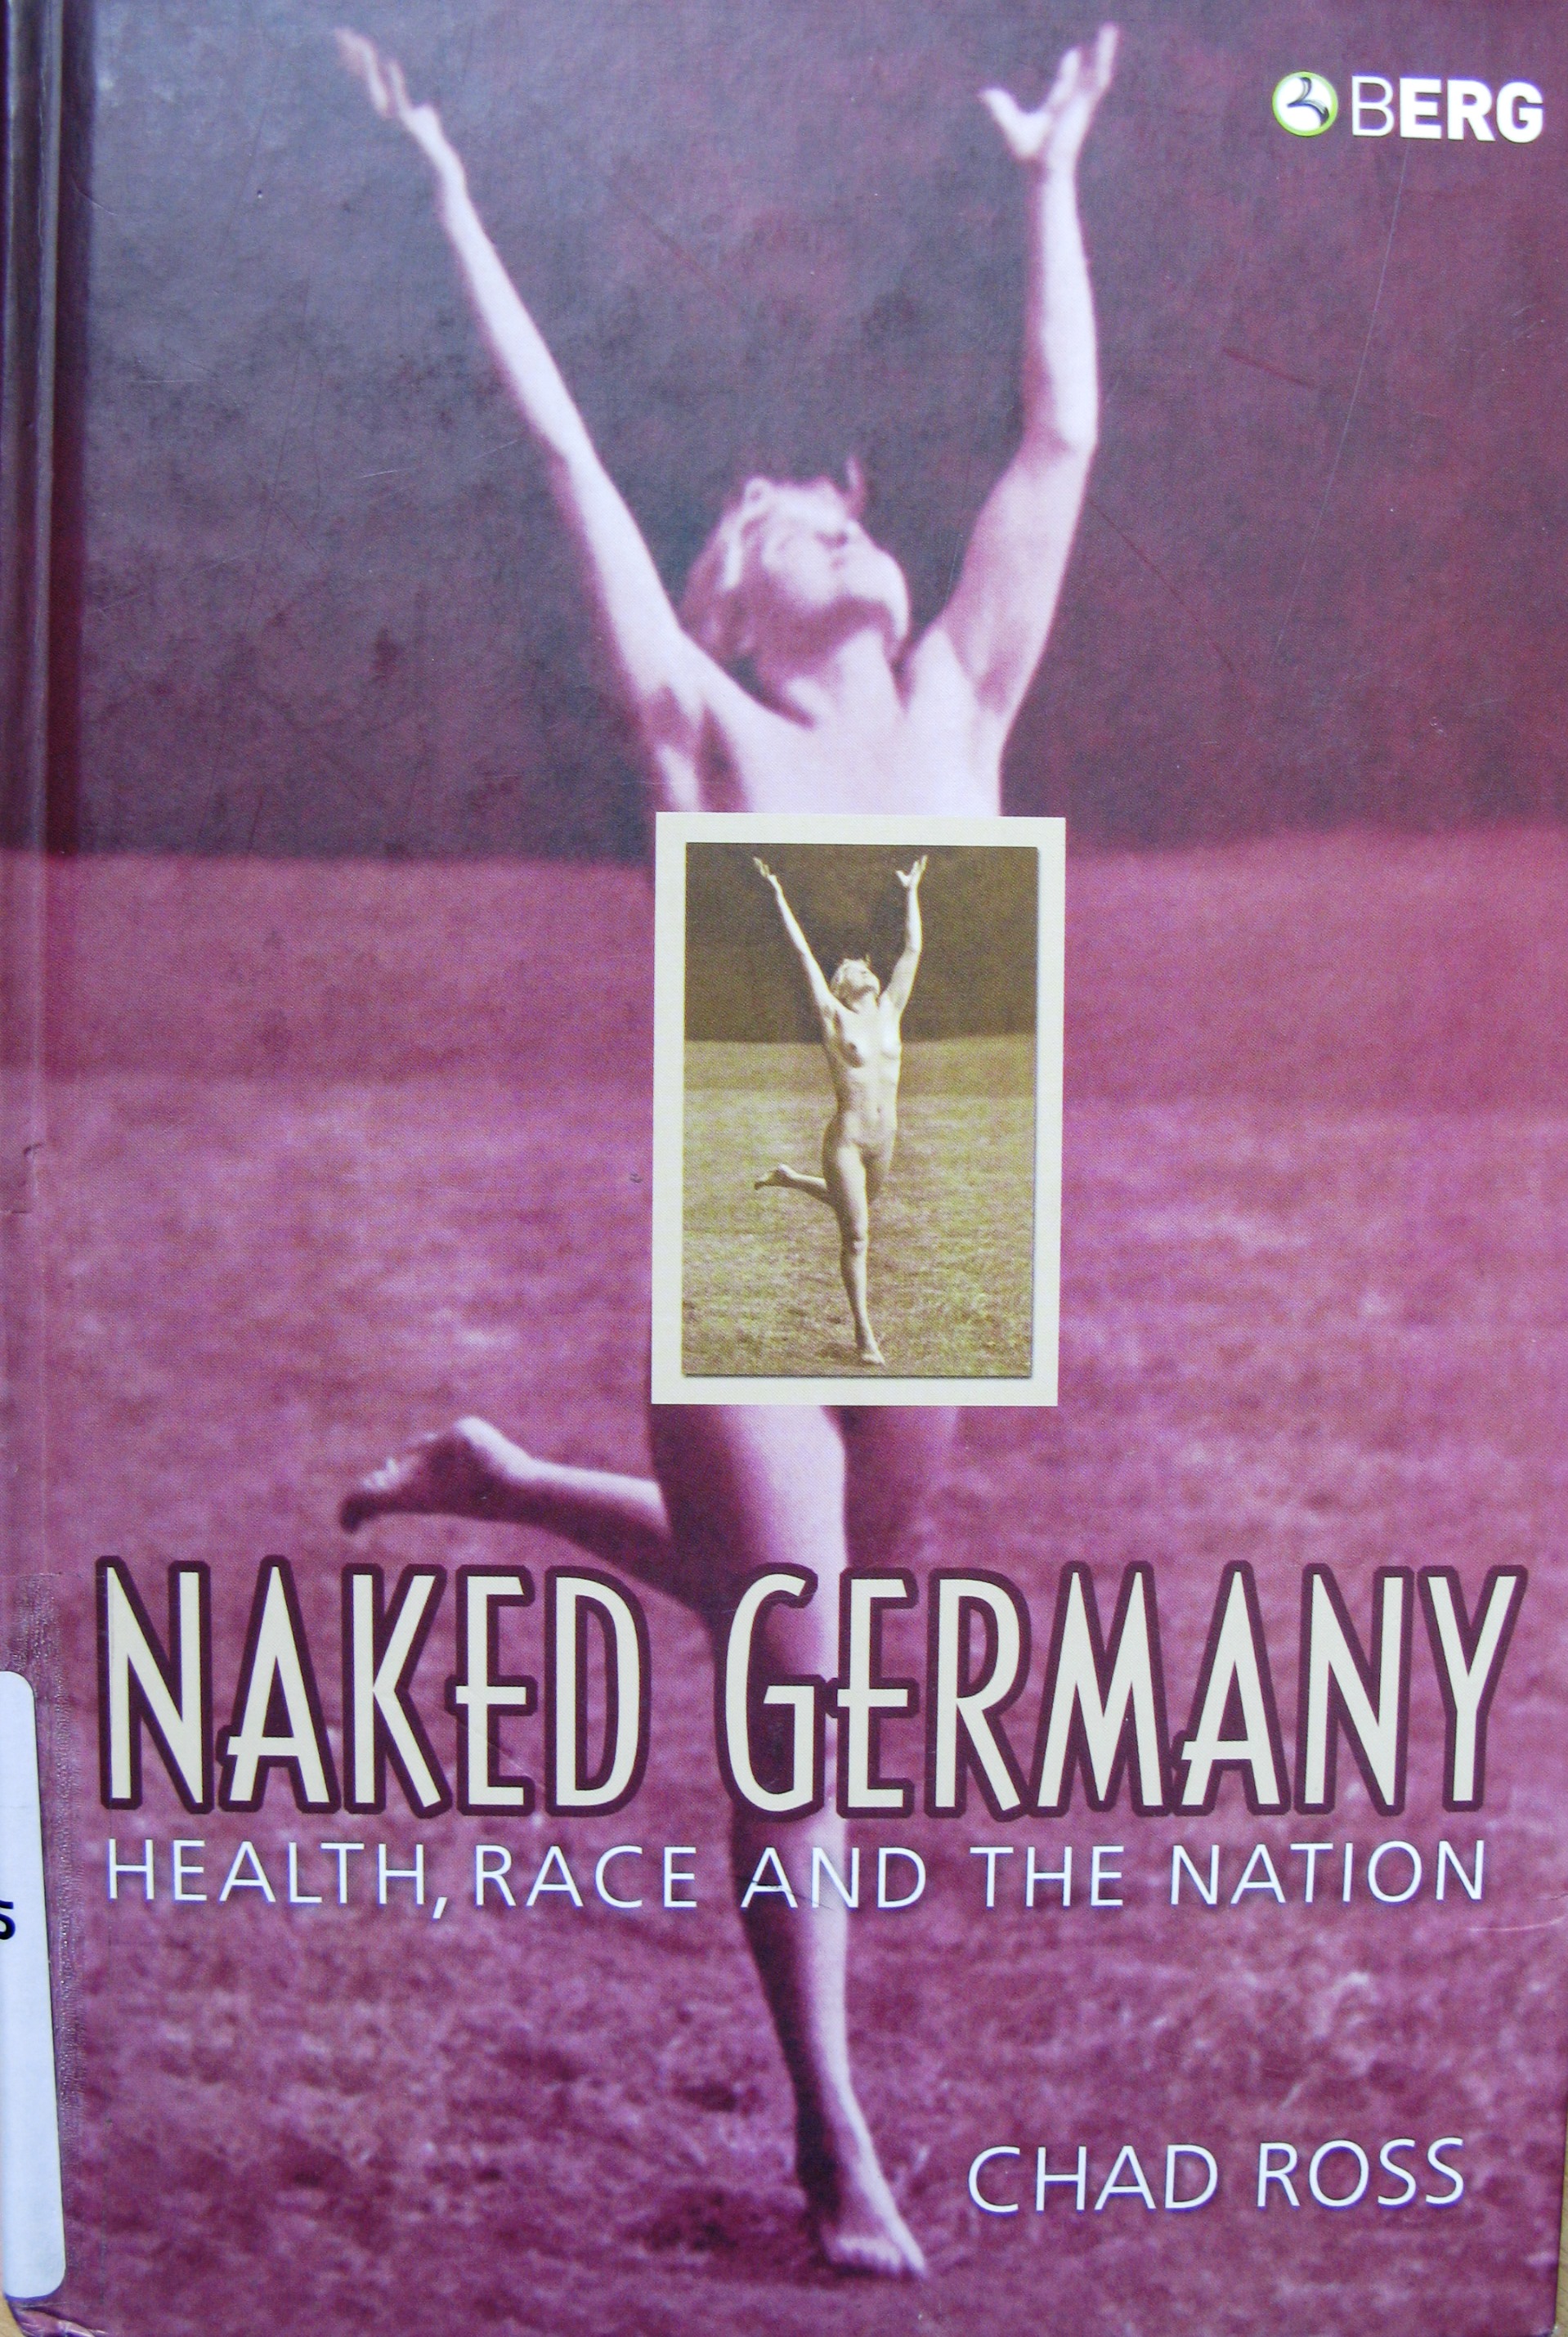 ana orge reccomend german naturist photos pic